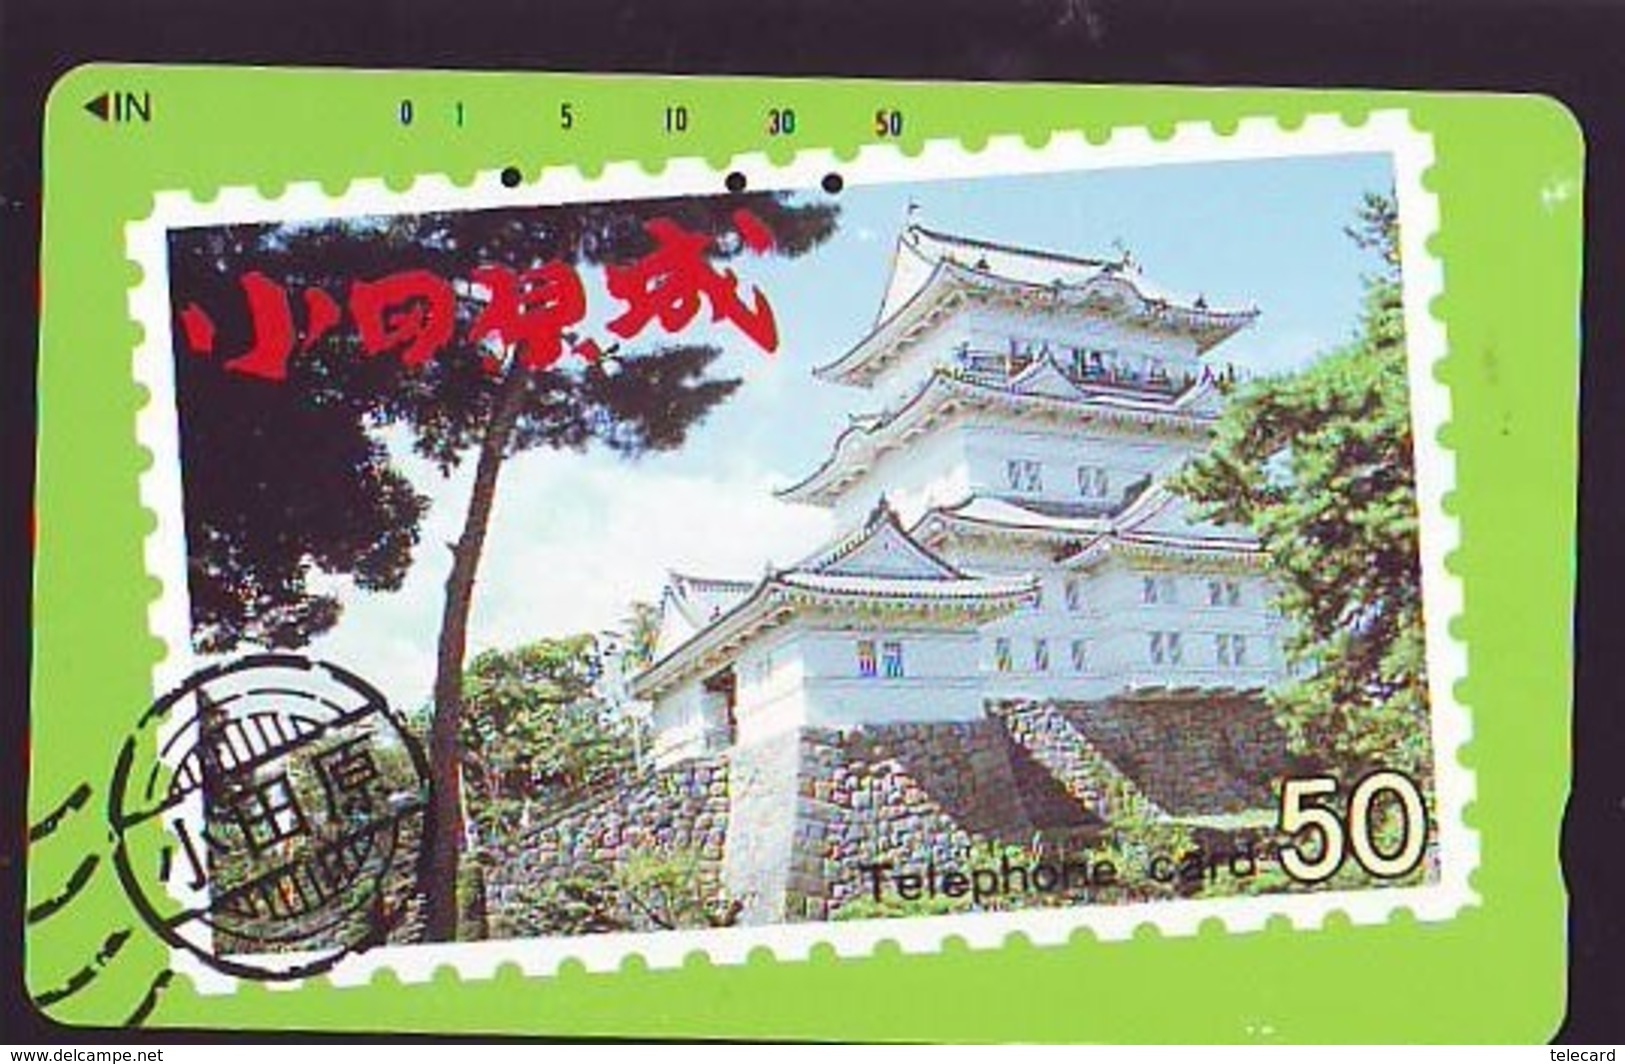 Télécarte Japon * Stamp & Phonecard On Japan Phonecard (304)  Timbre + Télécarte *  Briefmarke & TK - Stamps & Coins